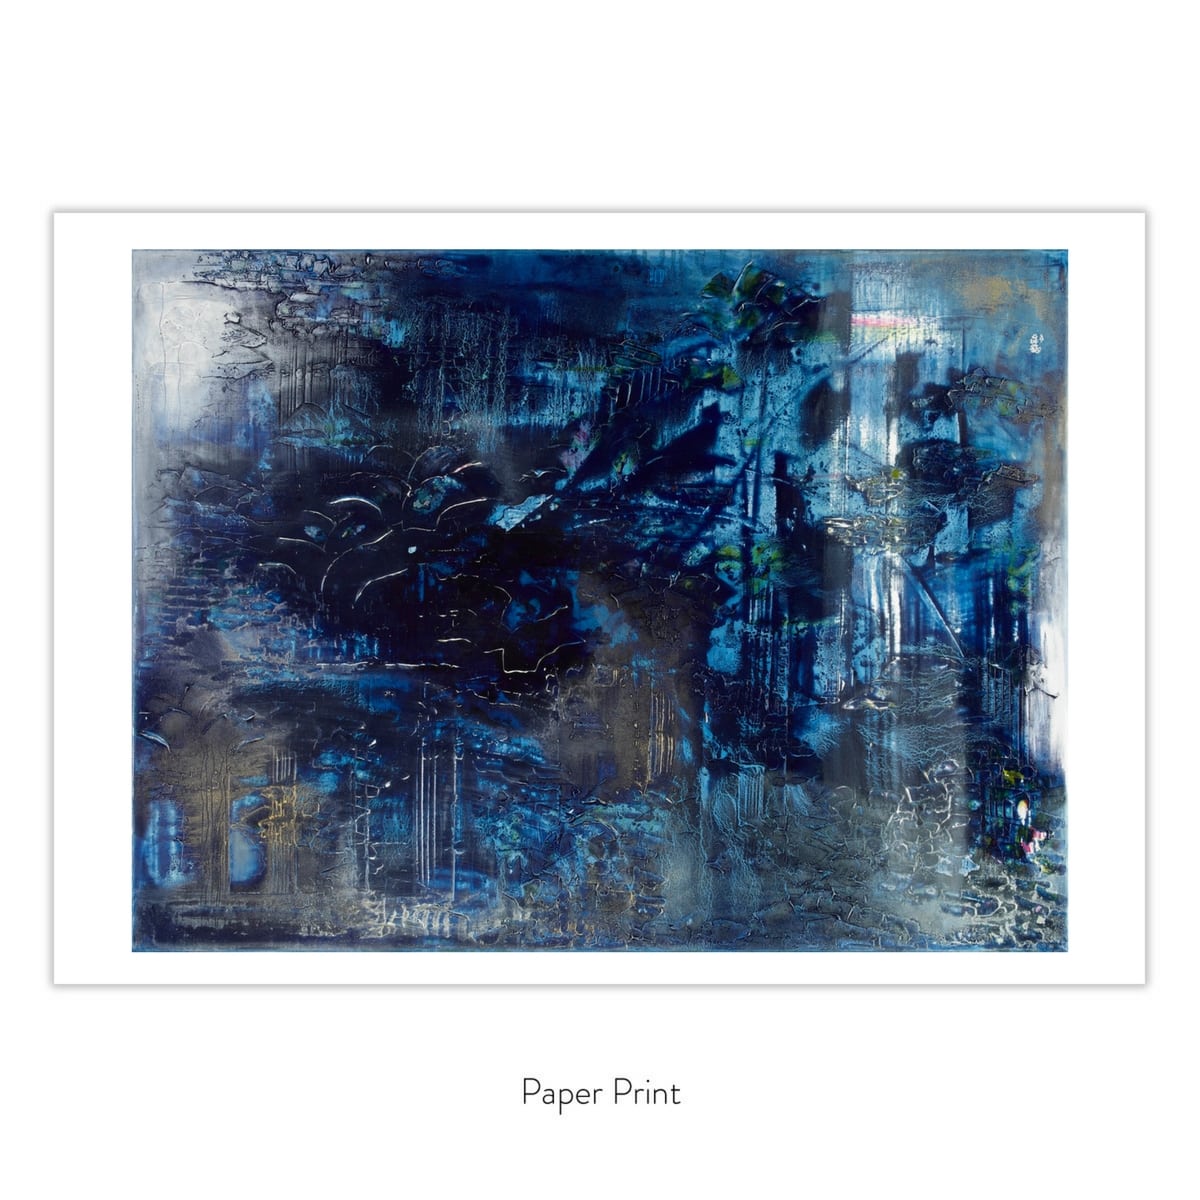 Jessica Zoob Contemporary fine art print - Deep Blue Magic 1 in paper print format